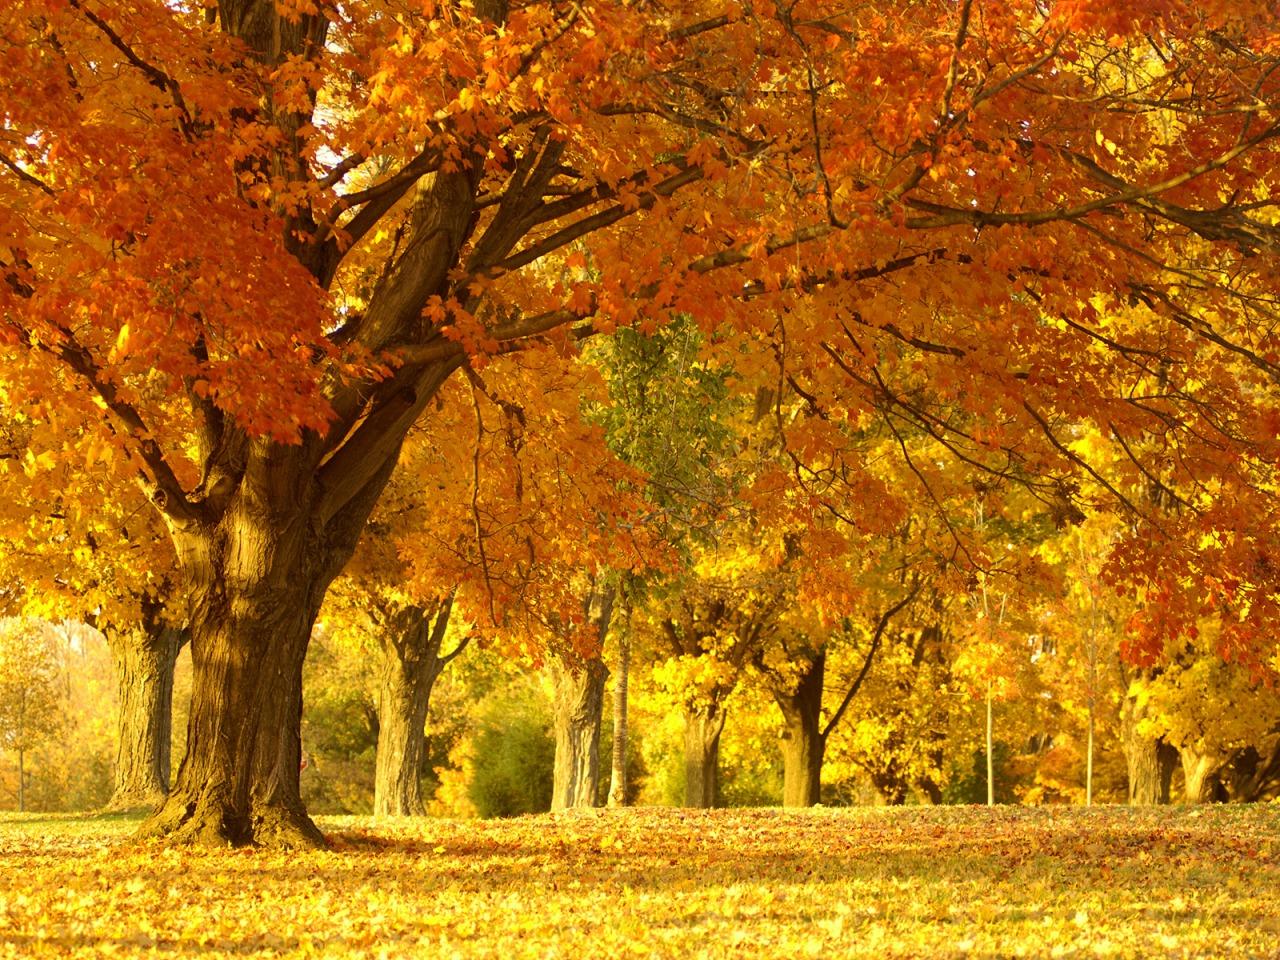 Golden Autumn Tree Wallpaper Autumn Nature Wallpaper in jpg format